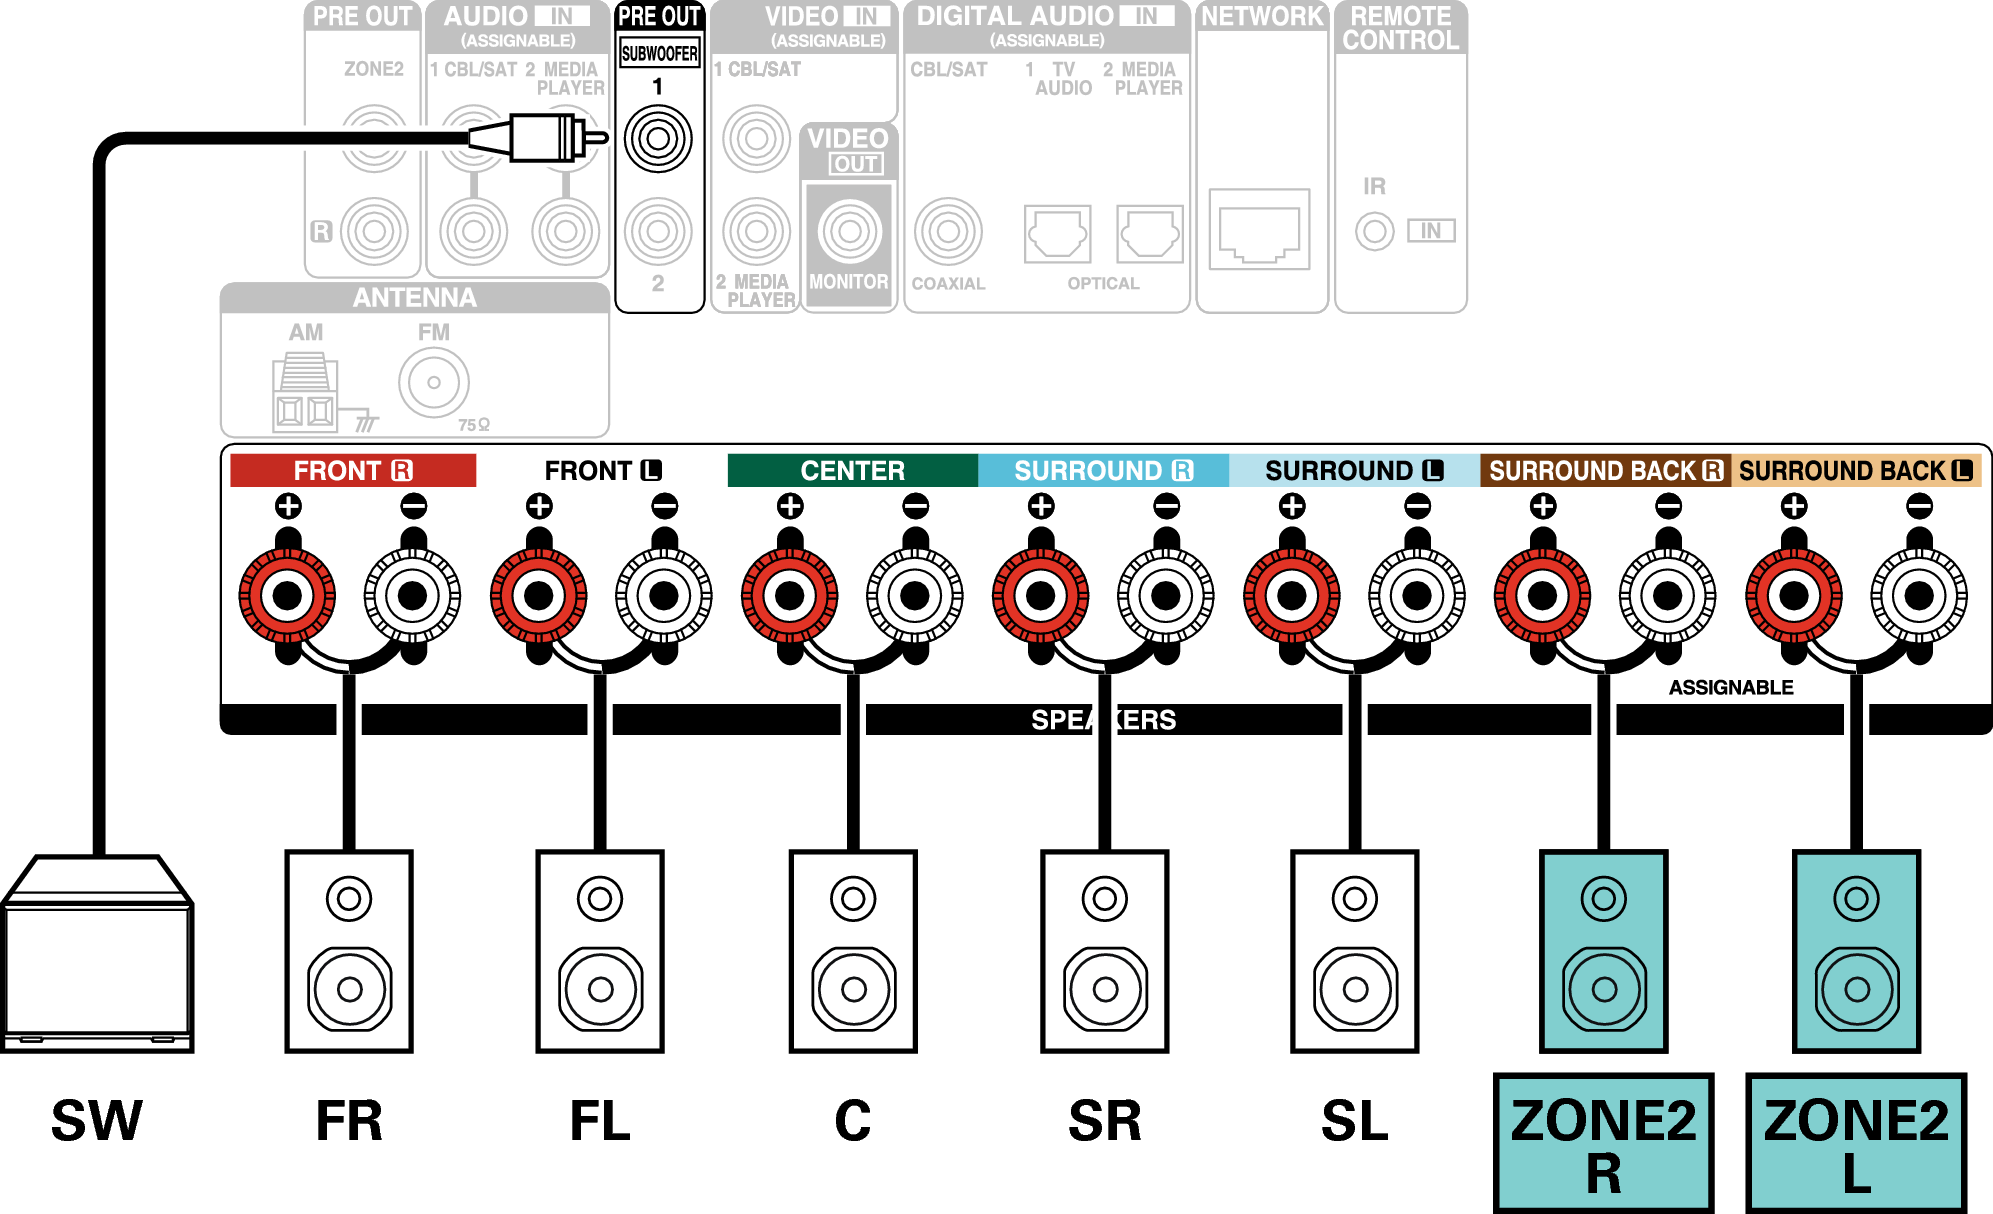 Conne SP 5.1 ZONE2 X14